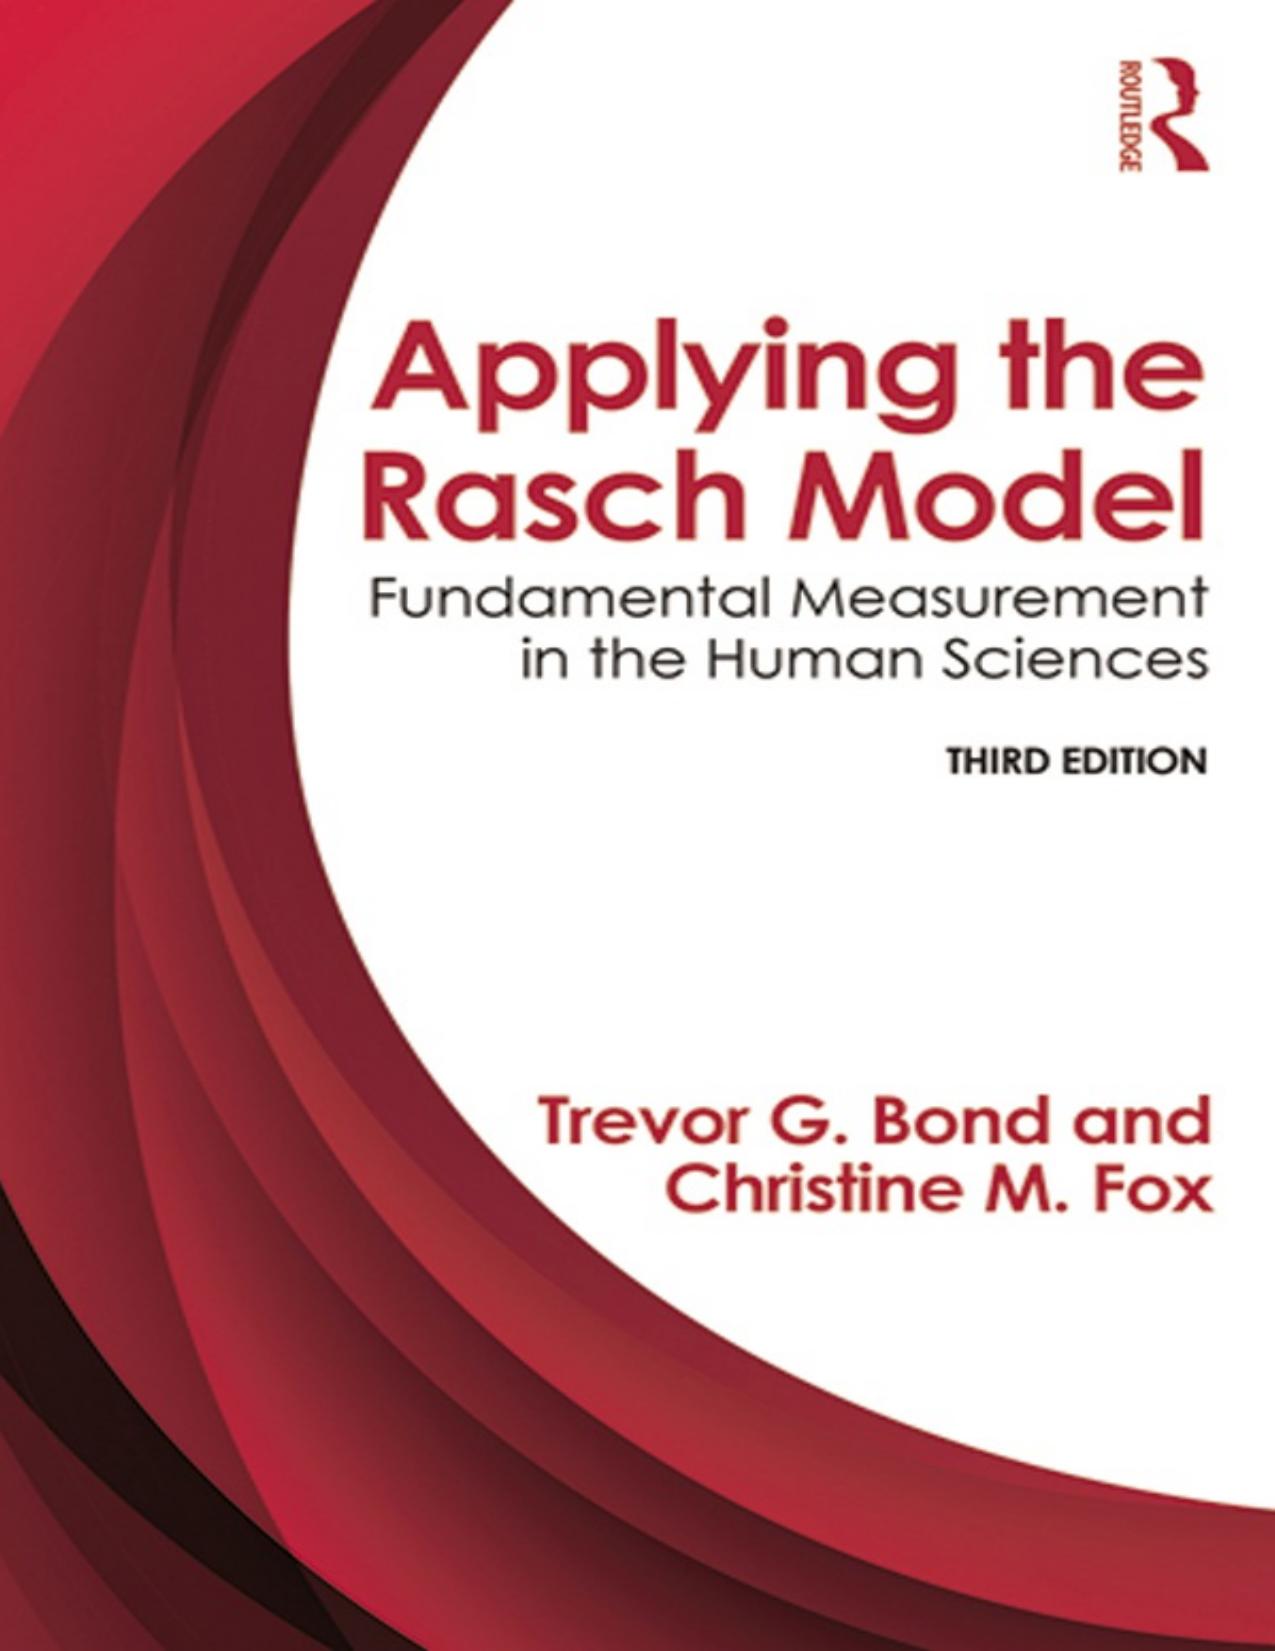 Applying the Rasch Model 3rd - Trevor Bond,Christine M. Fox & Christine M. Fox.jpg